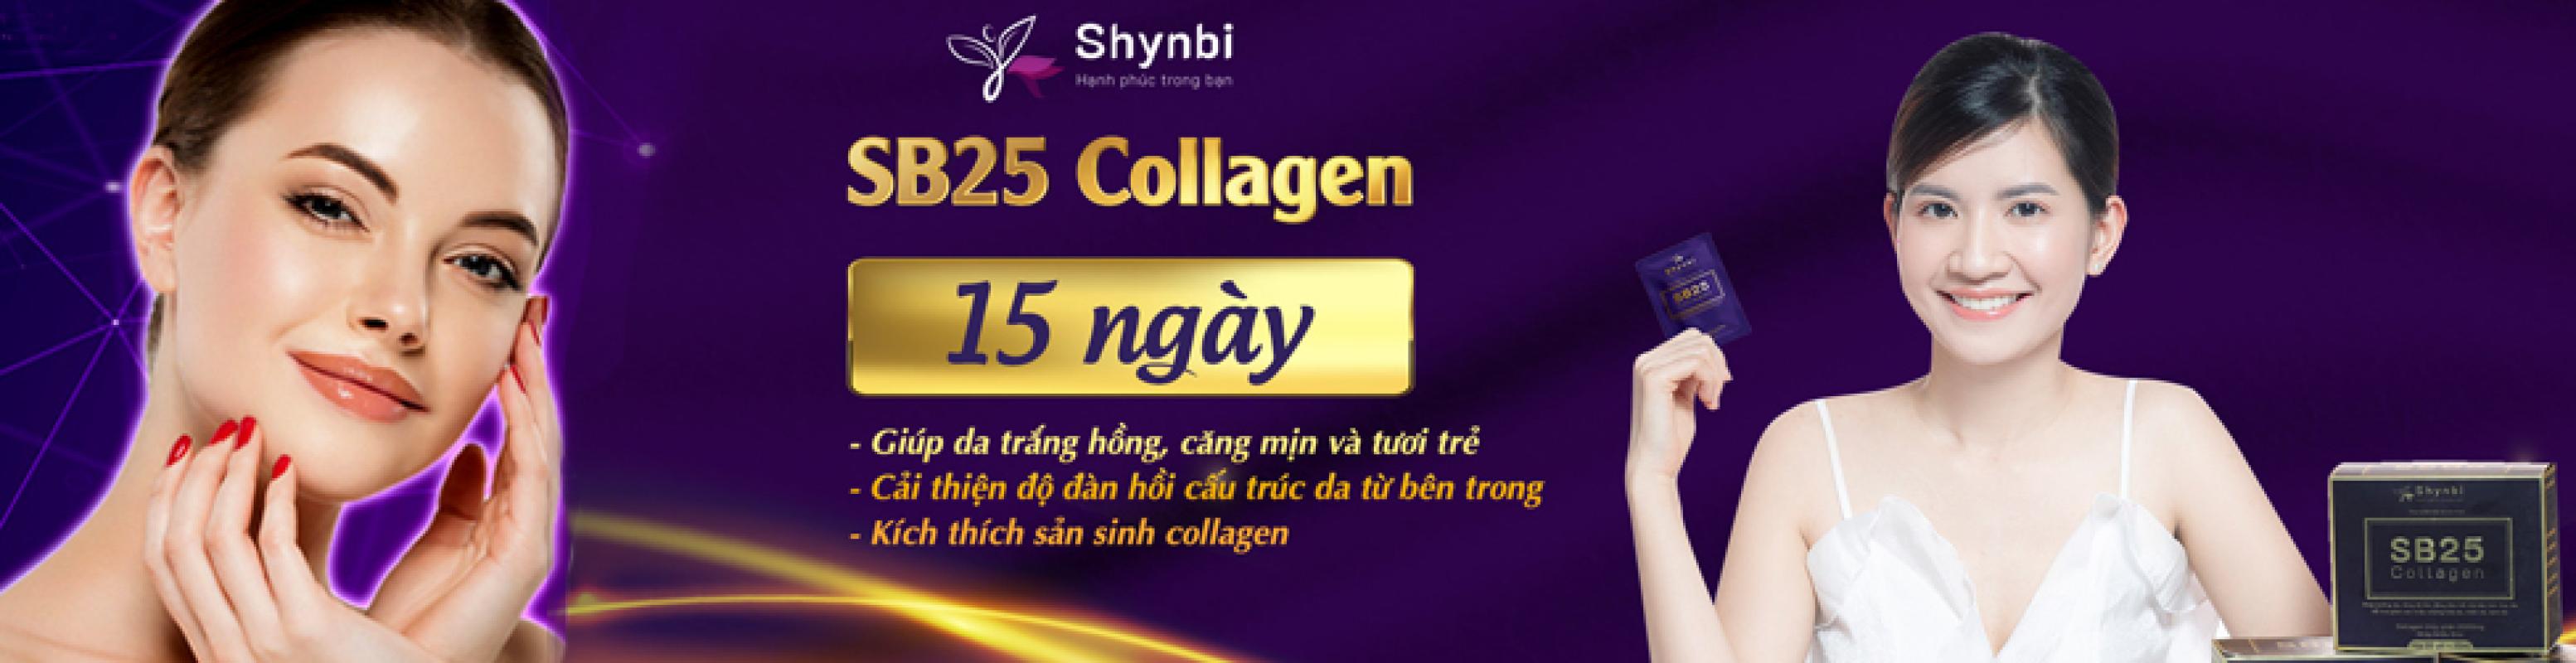 Shynbi SB25 Collagen 